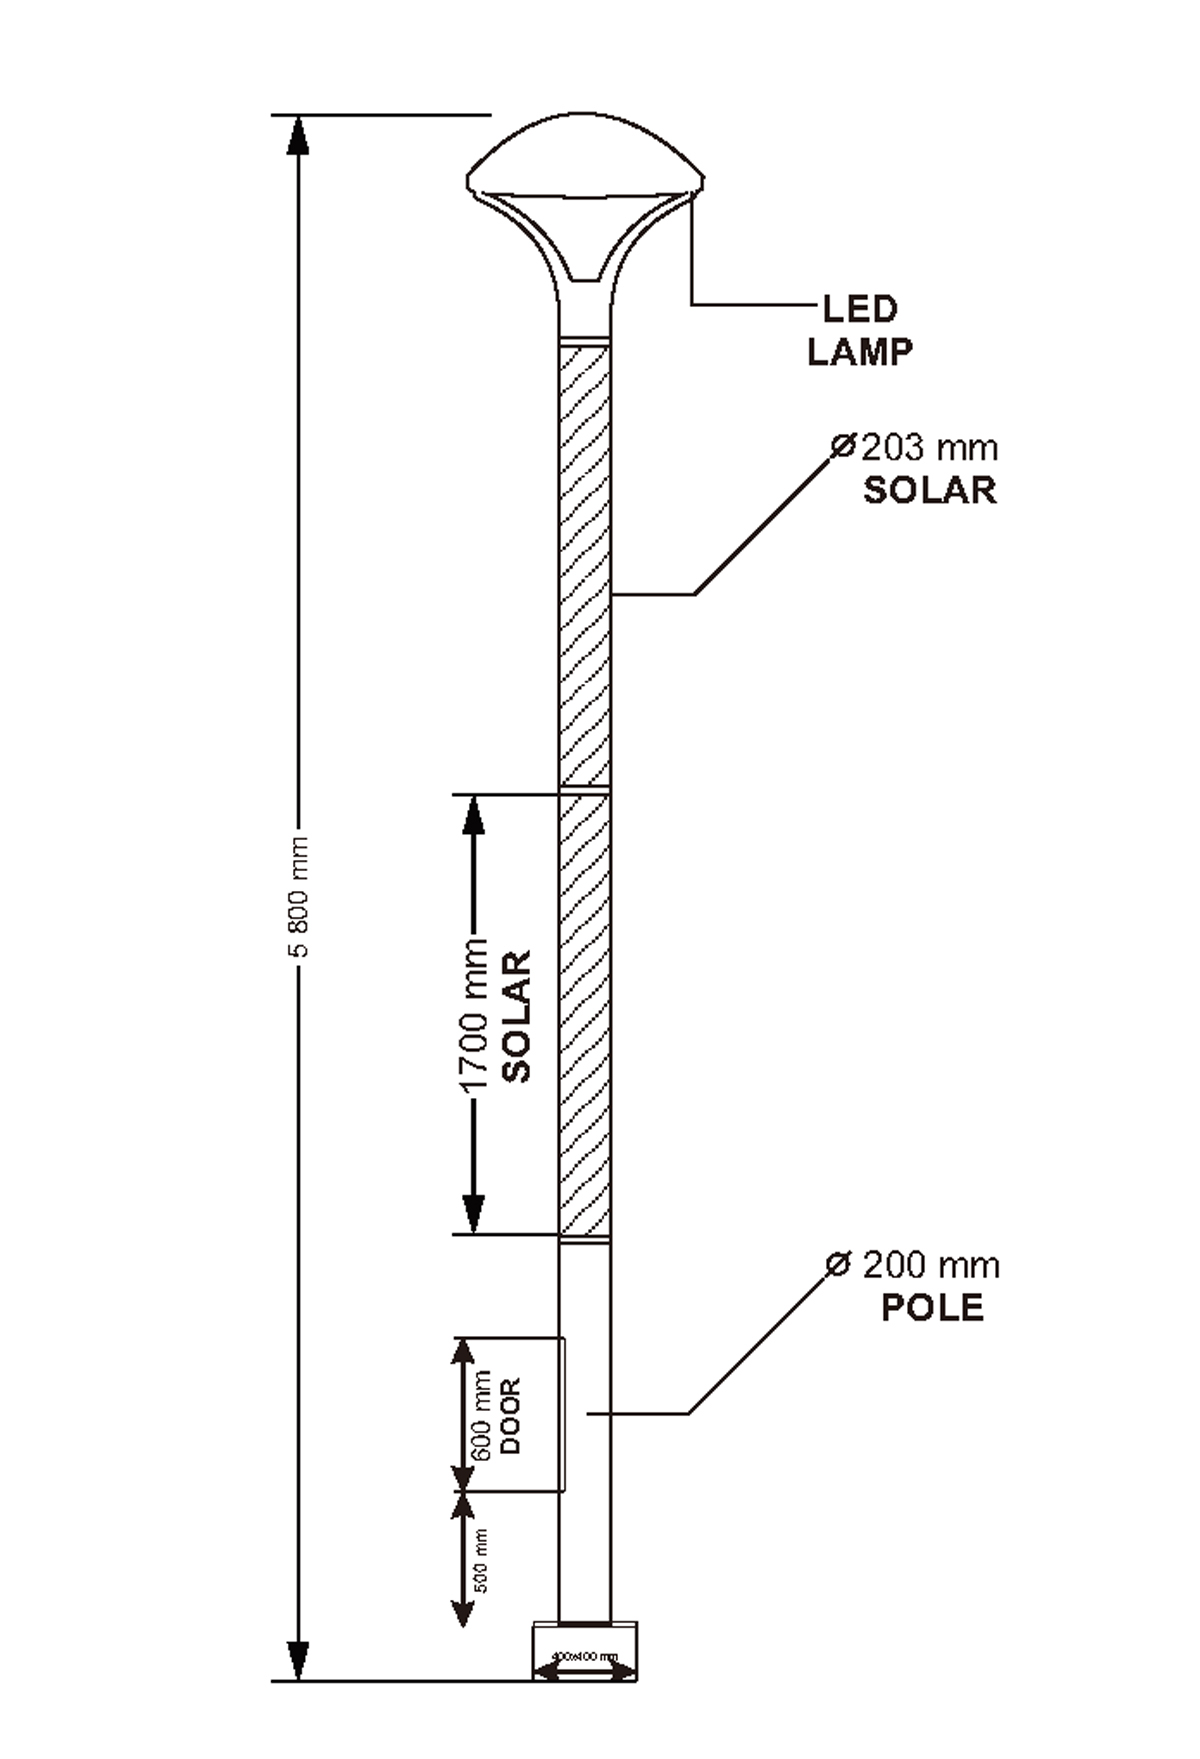 Solar-Smart-Pole-CAD